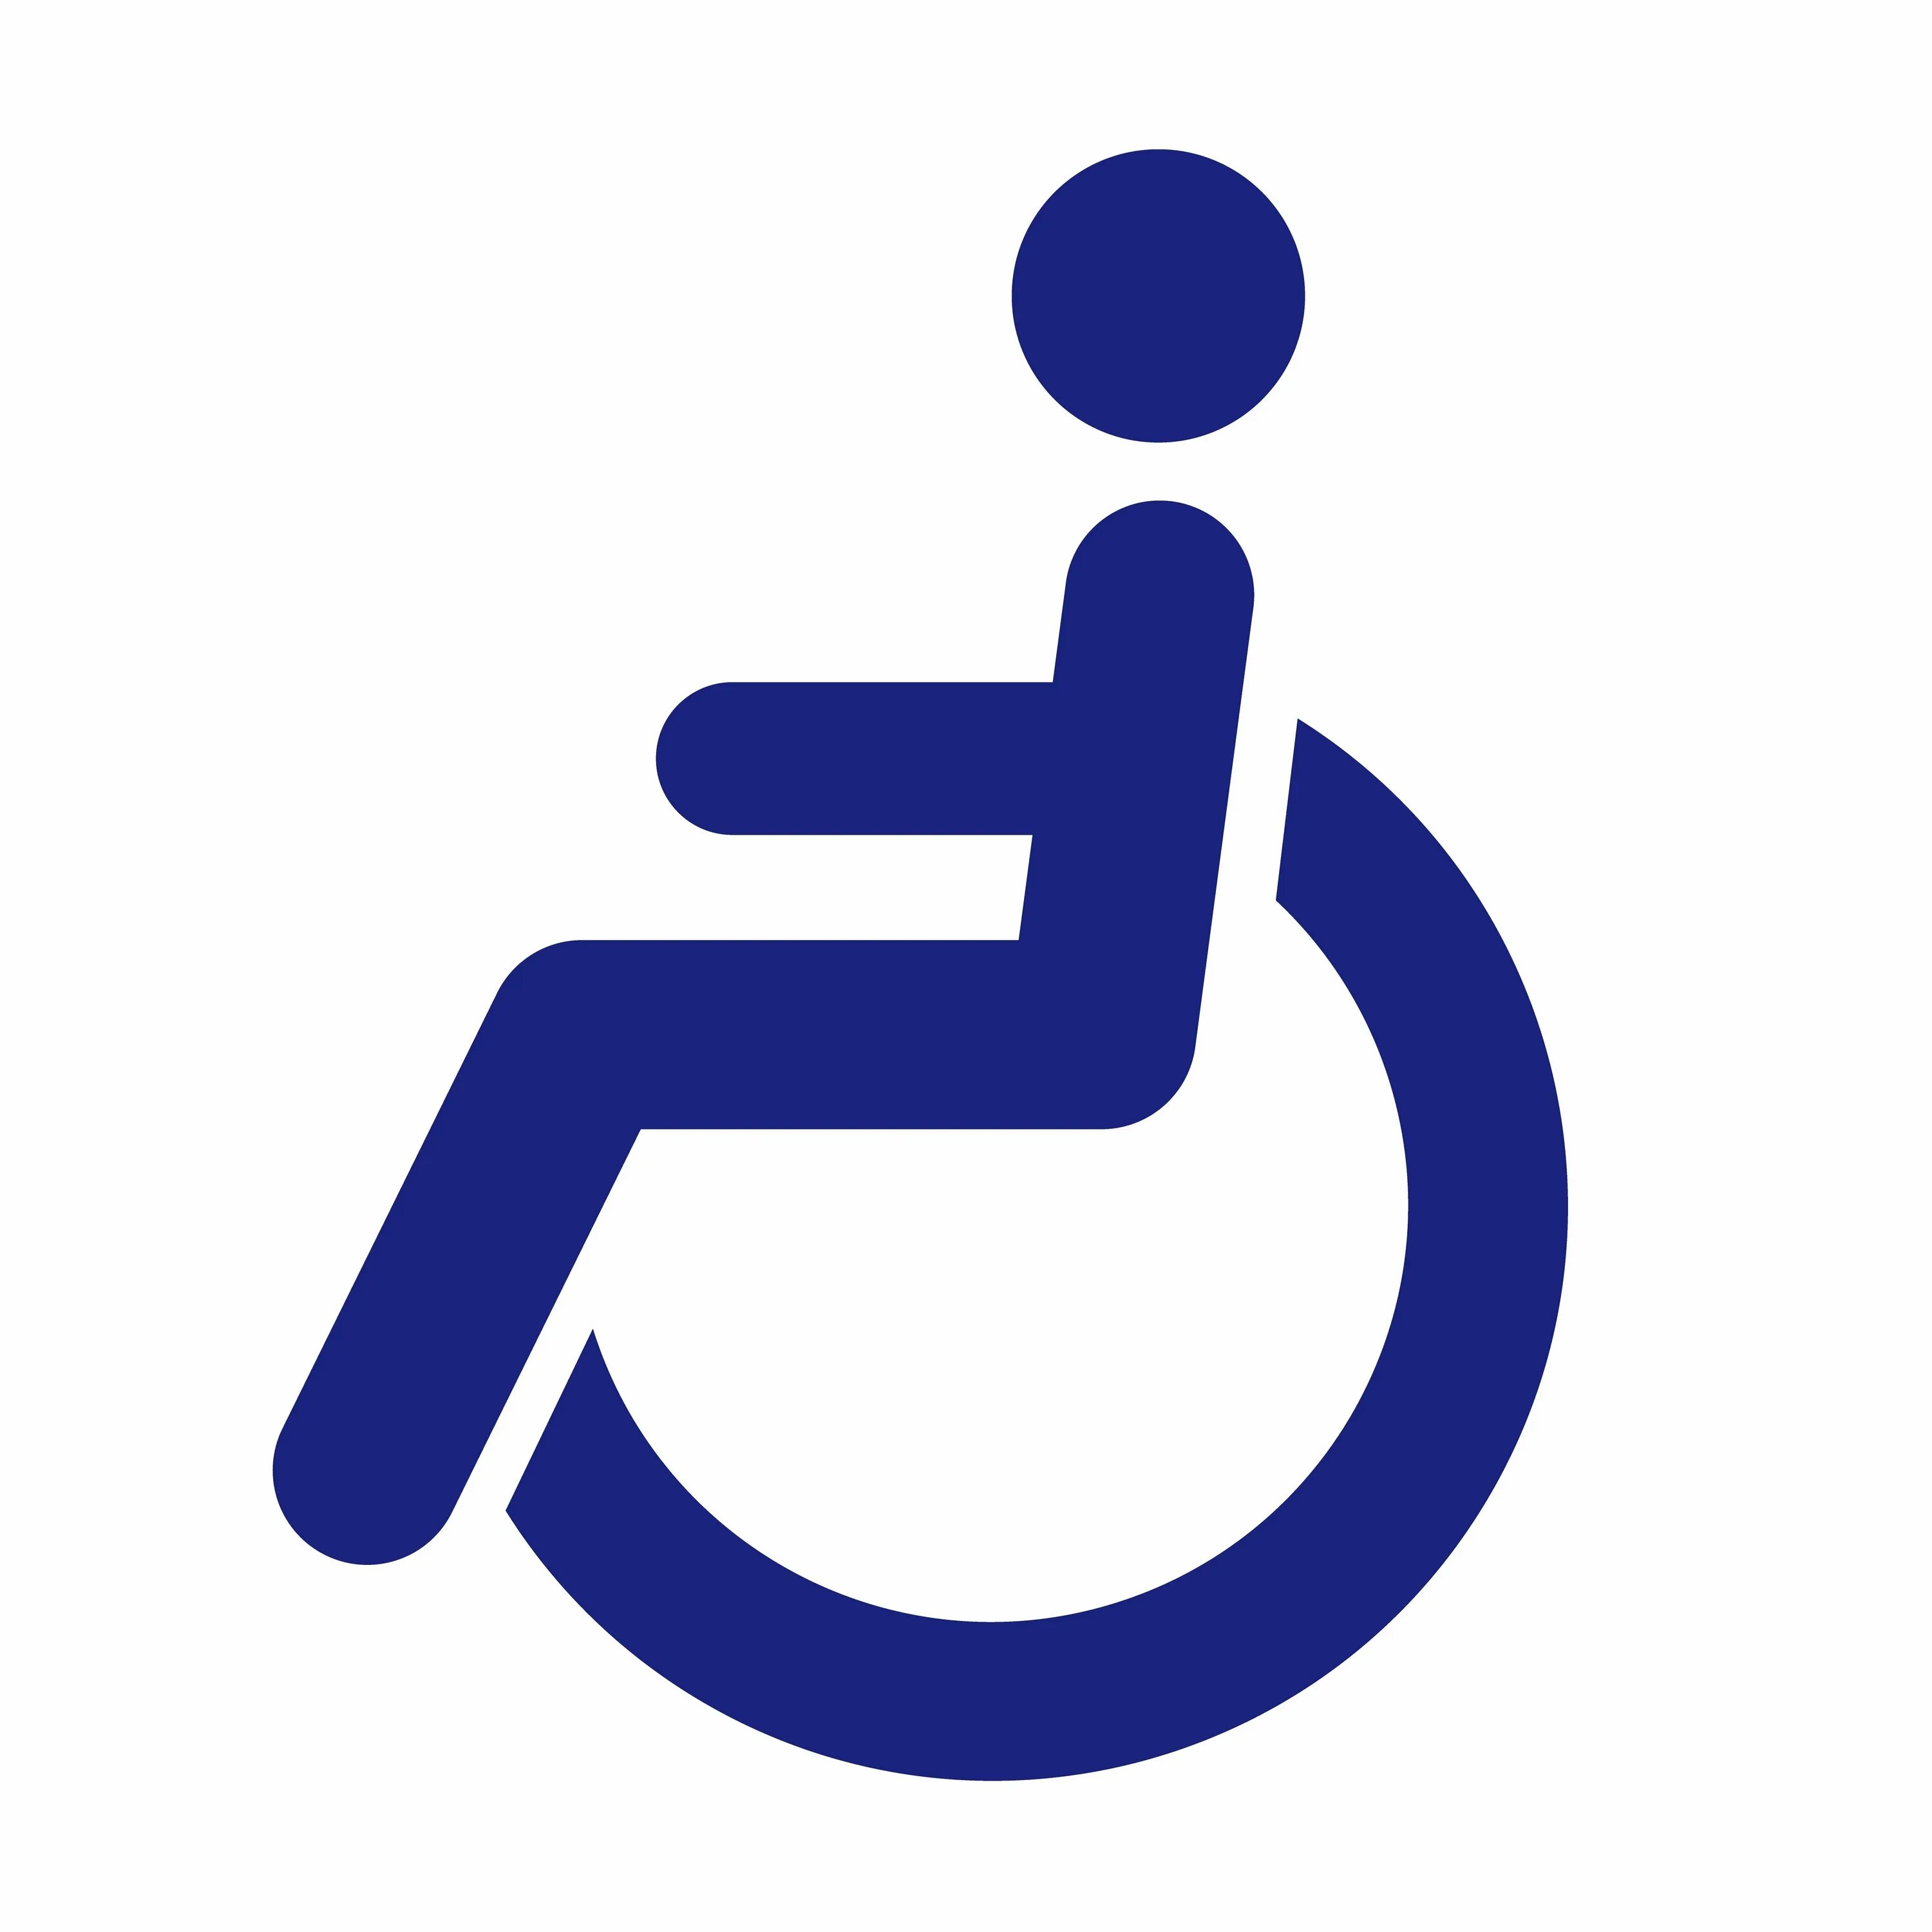 Знак инвалидной коляски. Значок инвалида. Иконка инвалид в коляске. Инвалид вектор. Знак инвалида векторный.